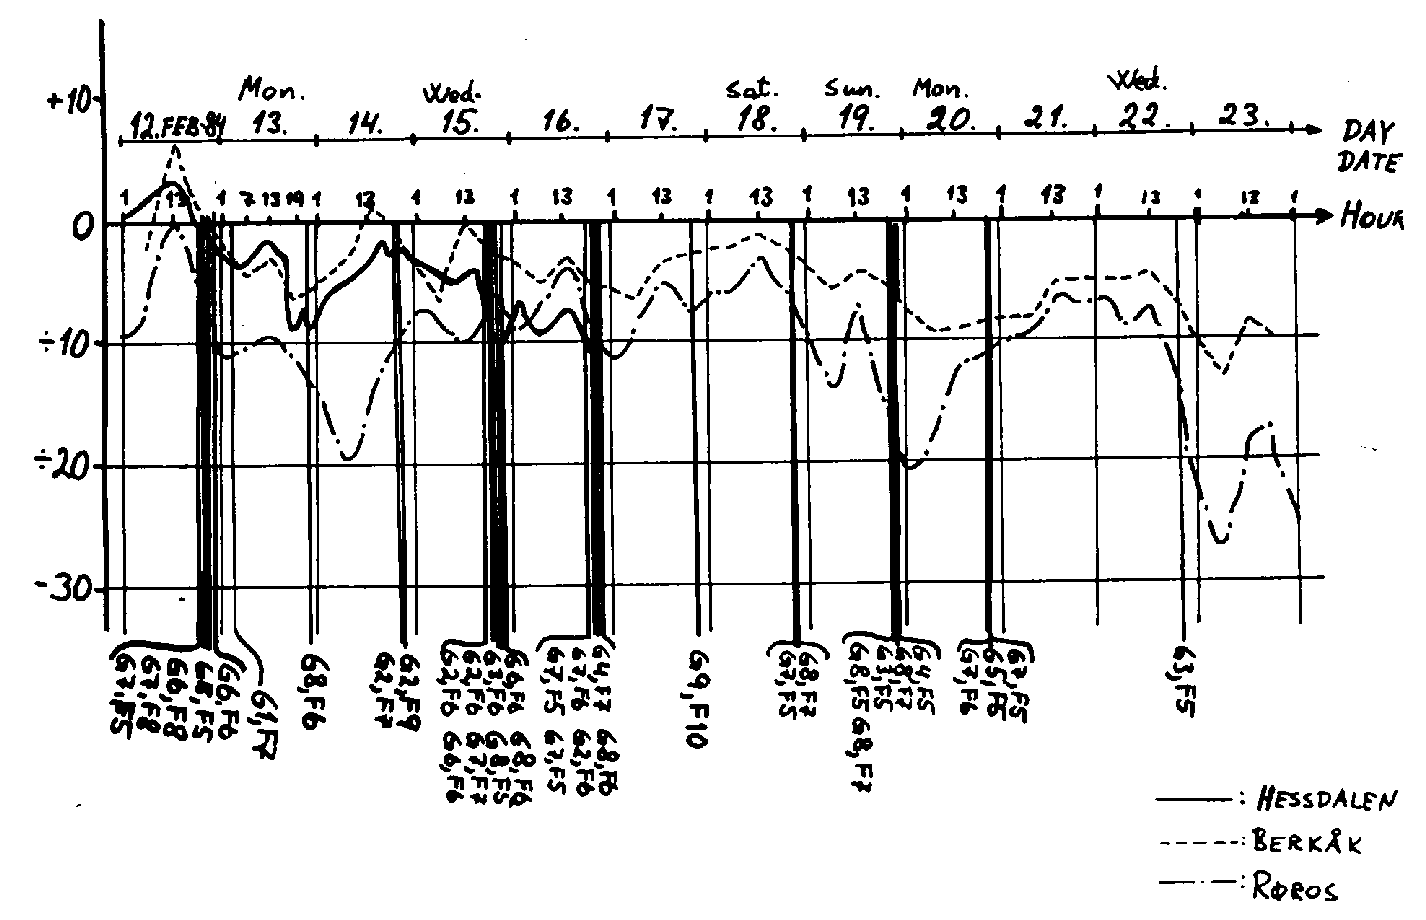 Hessdalen, Temperature diagram 3 (big version)